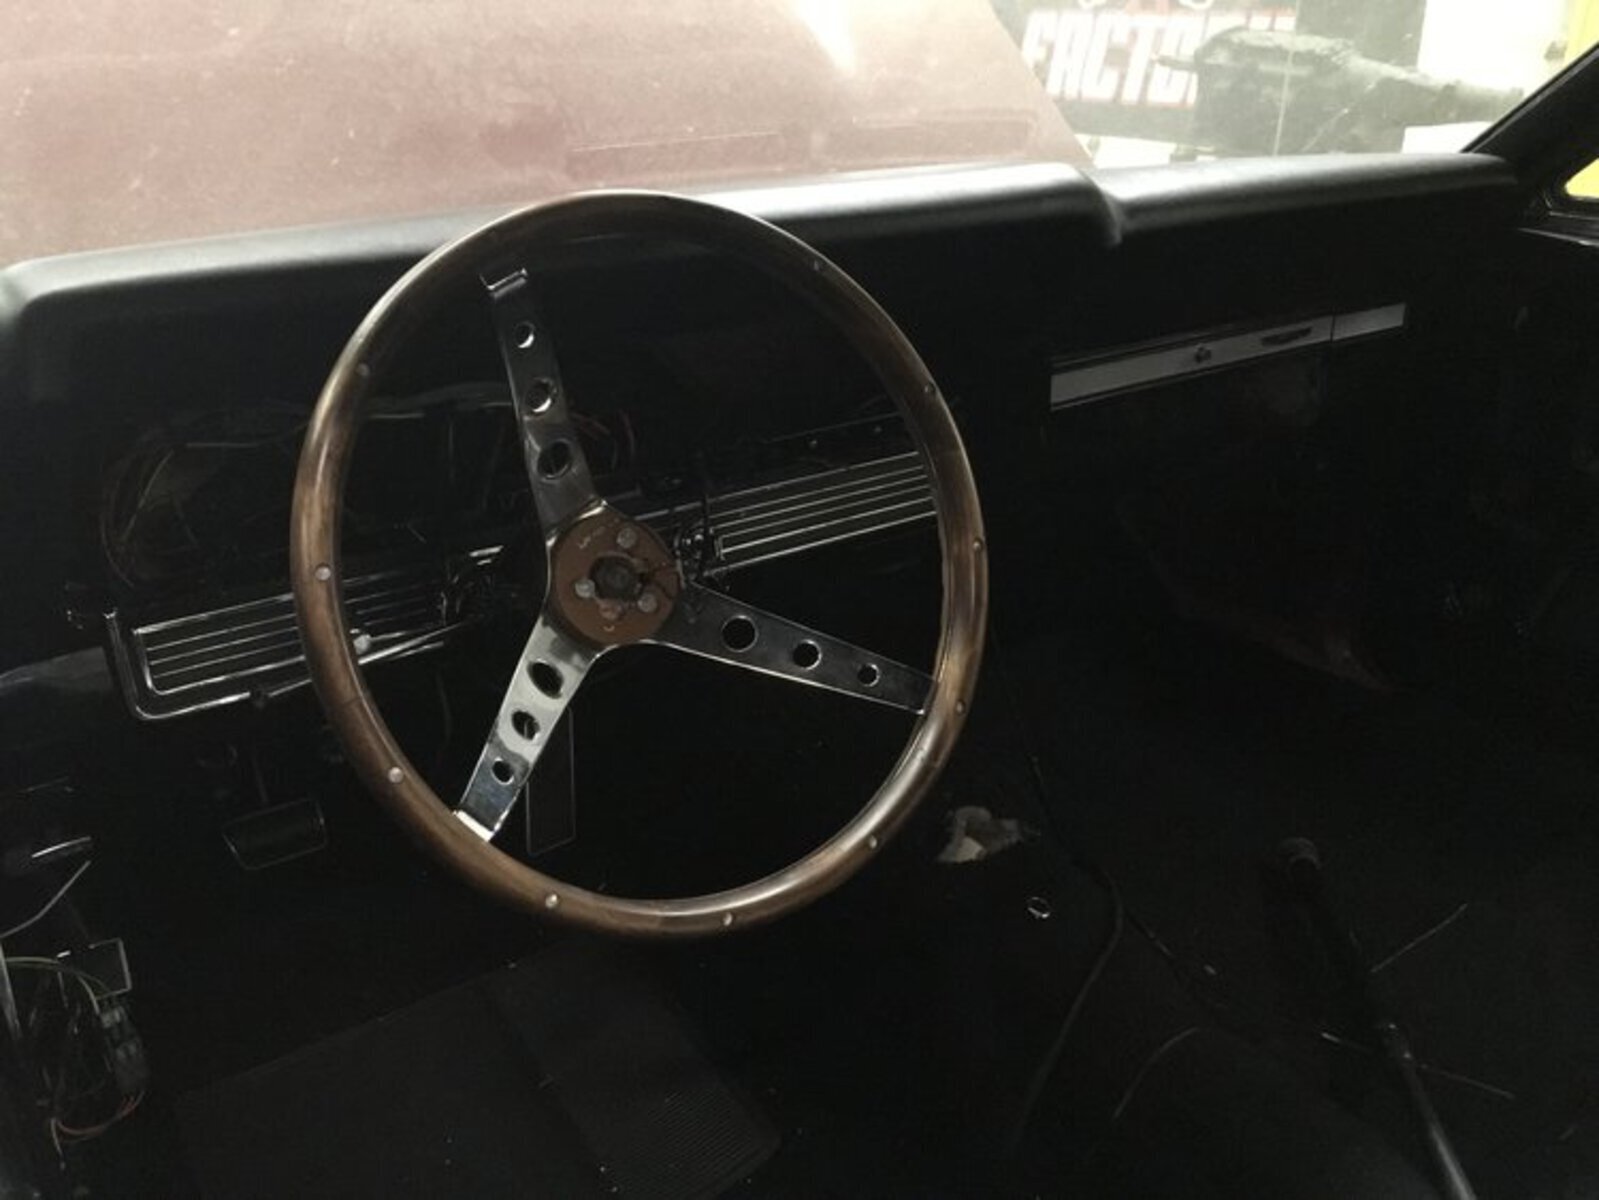 /public/hot-rods/66-ford-steering-wheel-minneapolis-custom-hot-rod-restorations-11.jpg